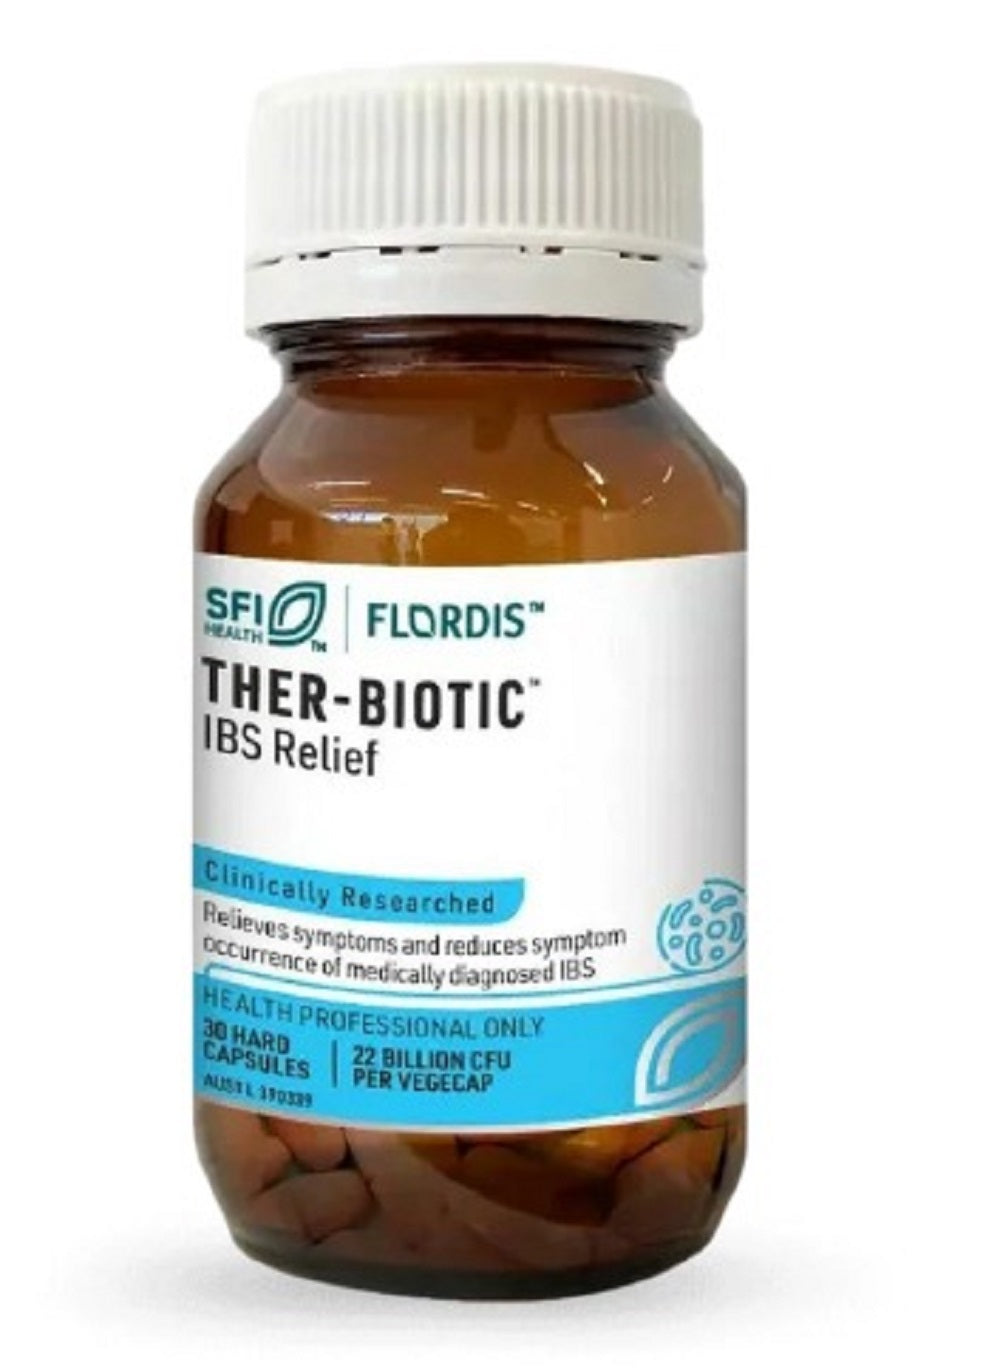 Flordis Ther-Biotic IBS Relief 30 Capsules